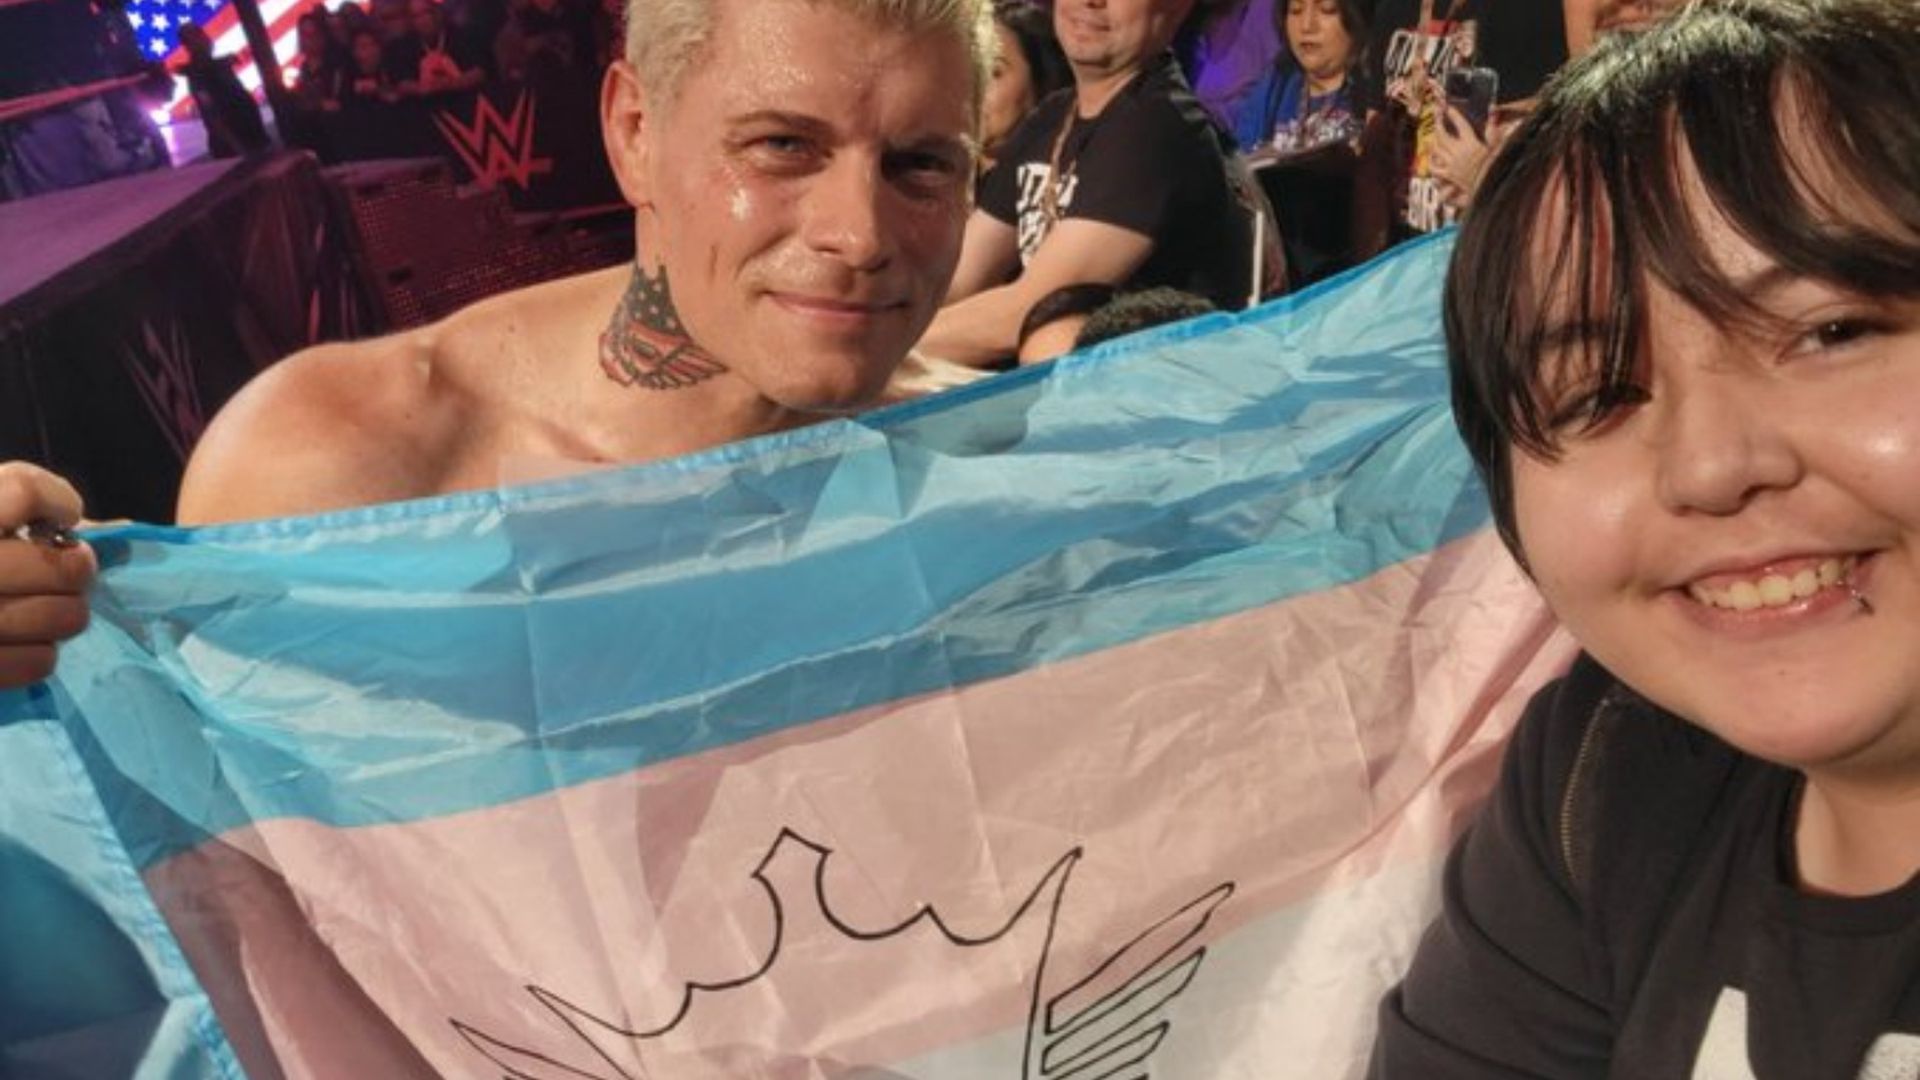 wwe star cody rhodes celebrates trans fan with customized trans pride flag